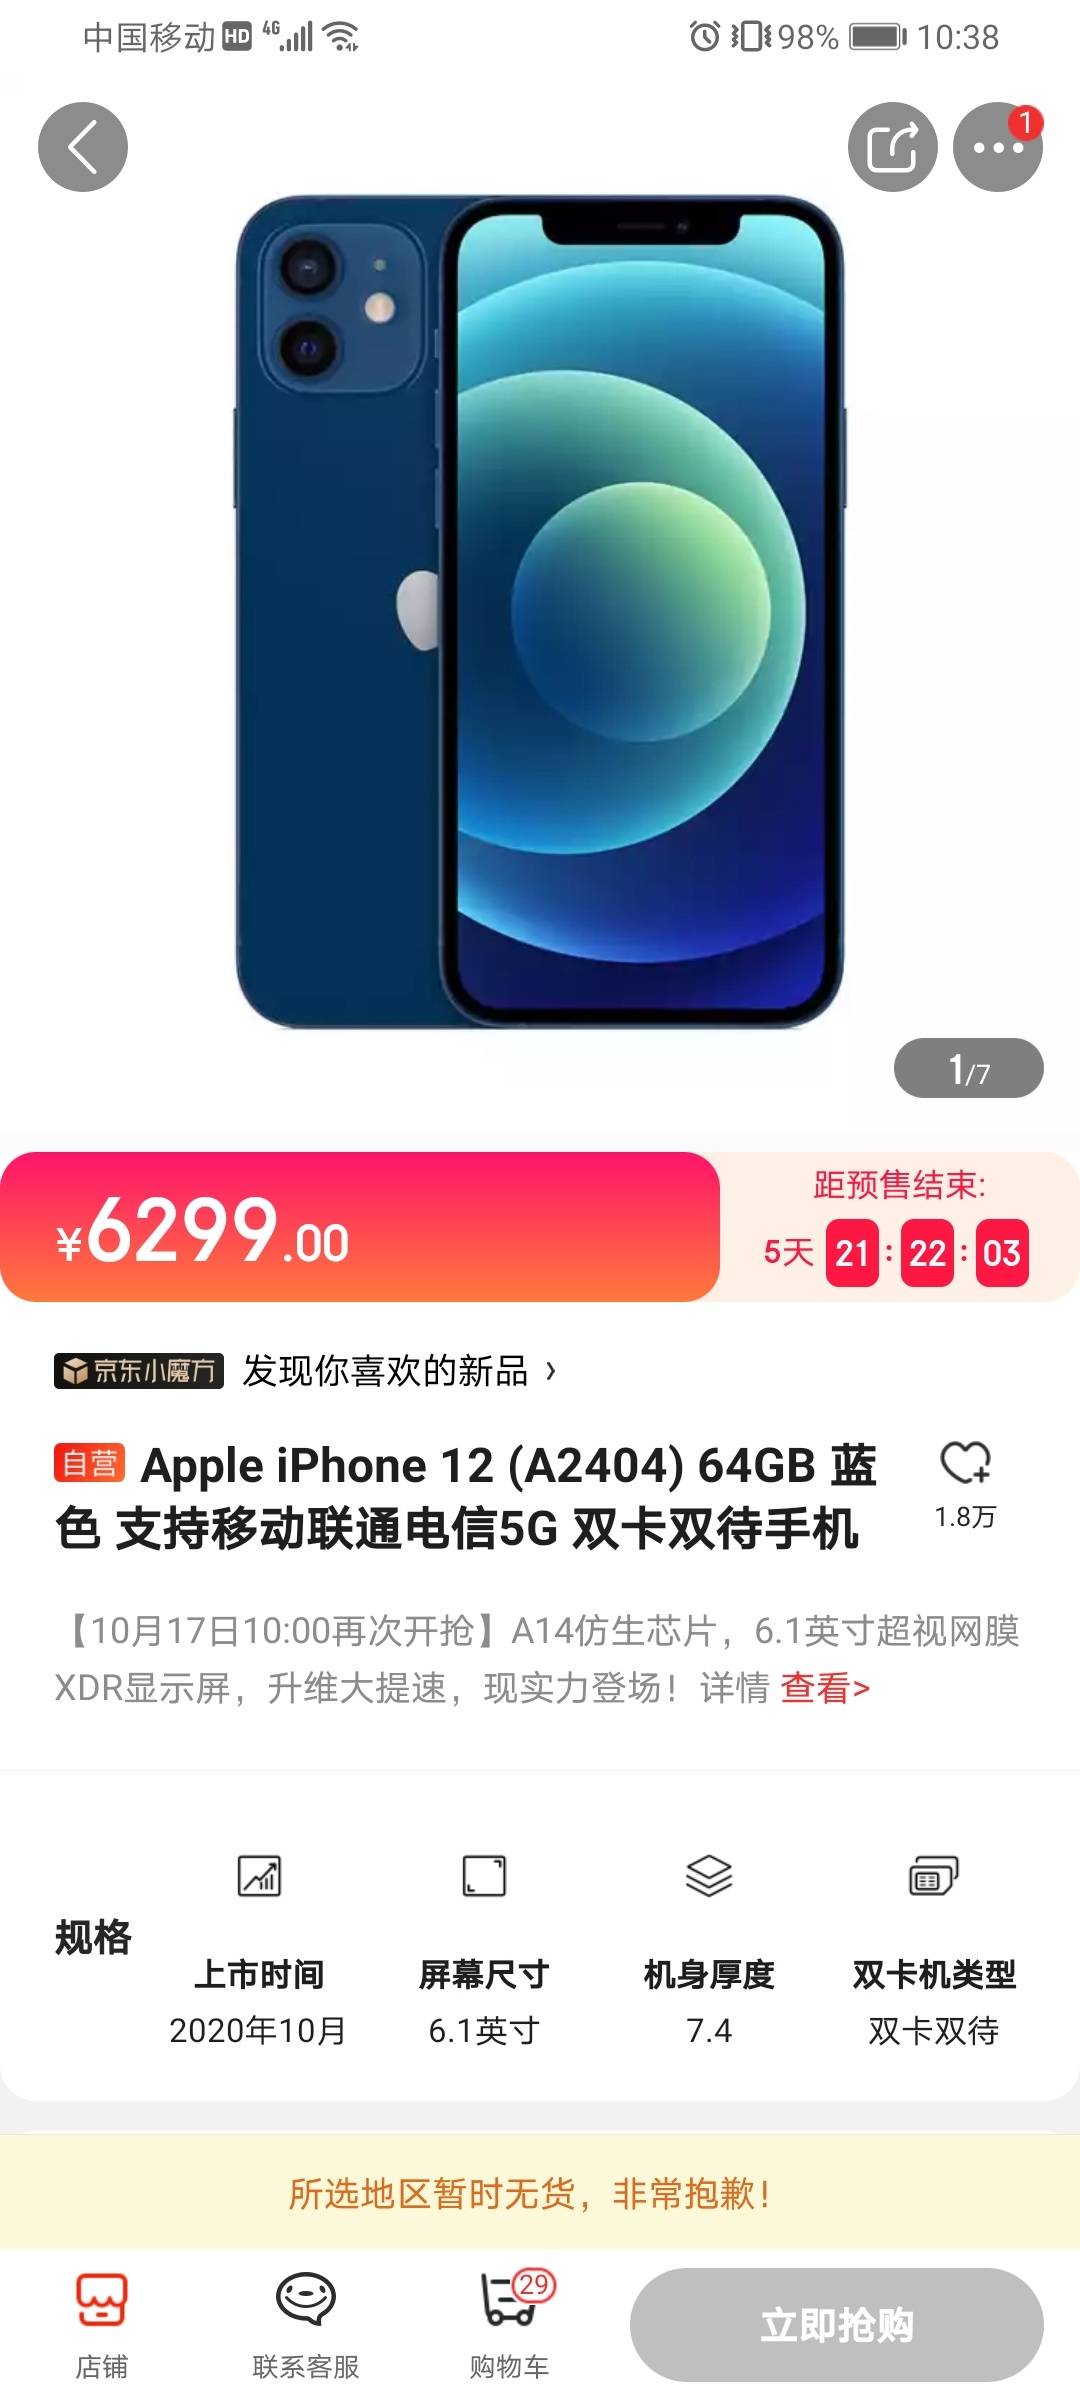 iPhone12首批售罄,天猫限购京东显示无货